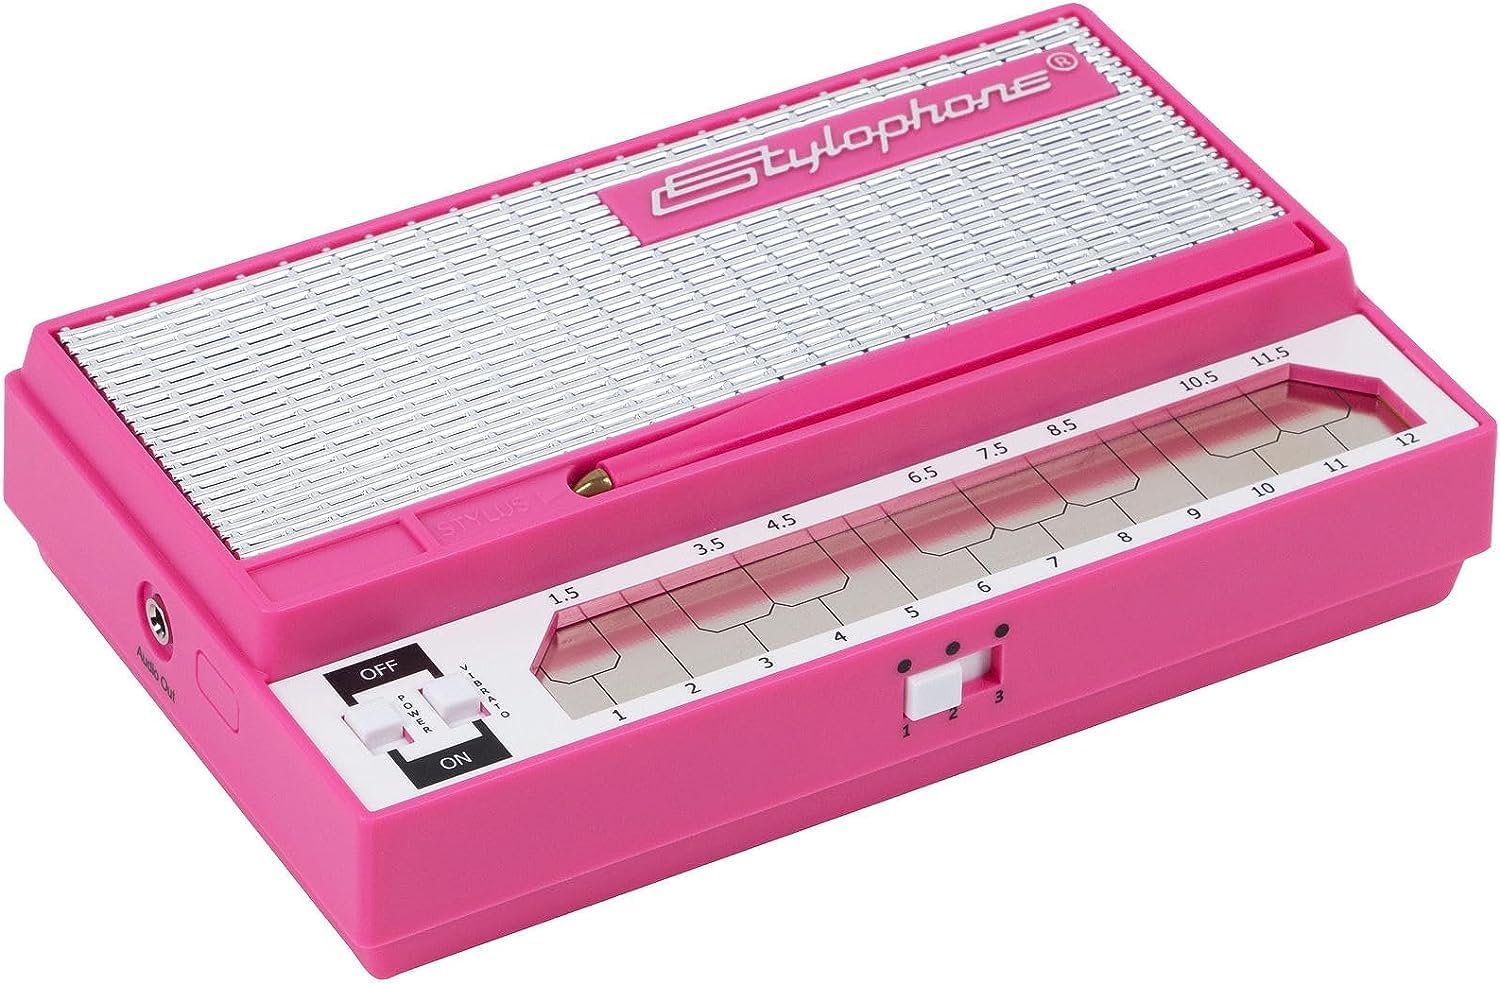 [4美國直購] Stylophone Pink 口袋掌上型合成器 粉紅特別版 Pocket Electronic Synthesizer